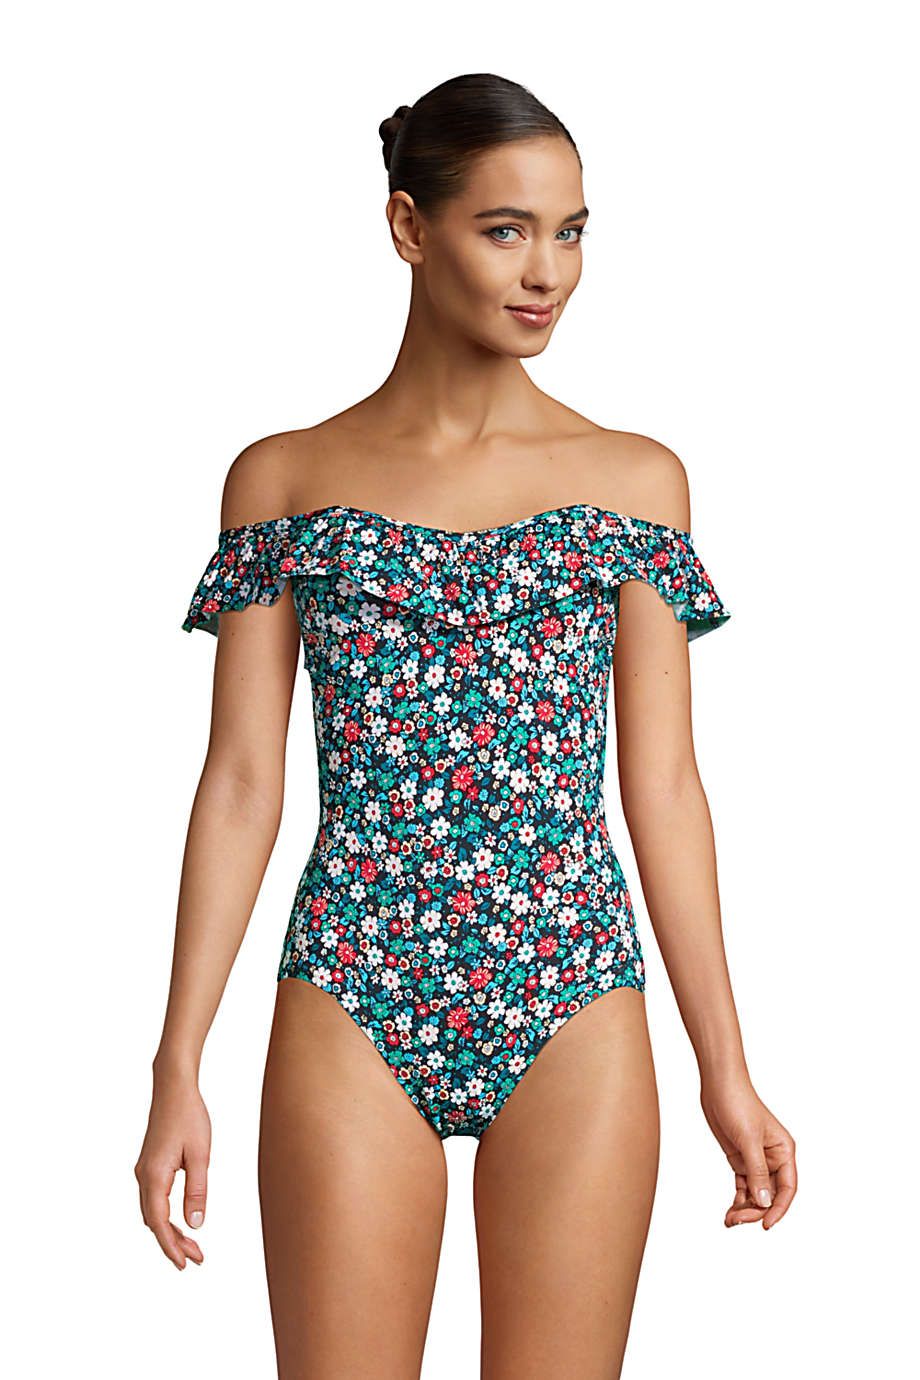 Women Swimming Costume FAPIZI Ladies Leaves Print One Pieces Swimwear Ruffle Shoulder Swimsuit Beachwear Bathing Suit 